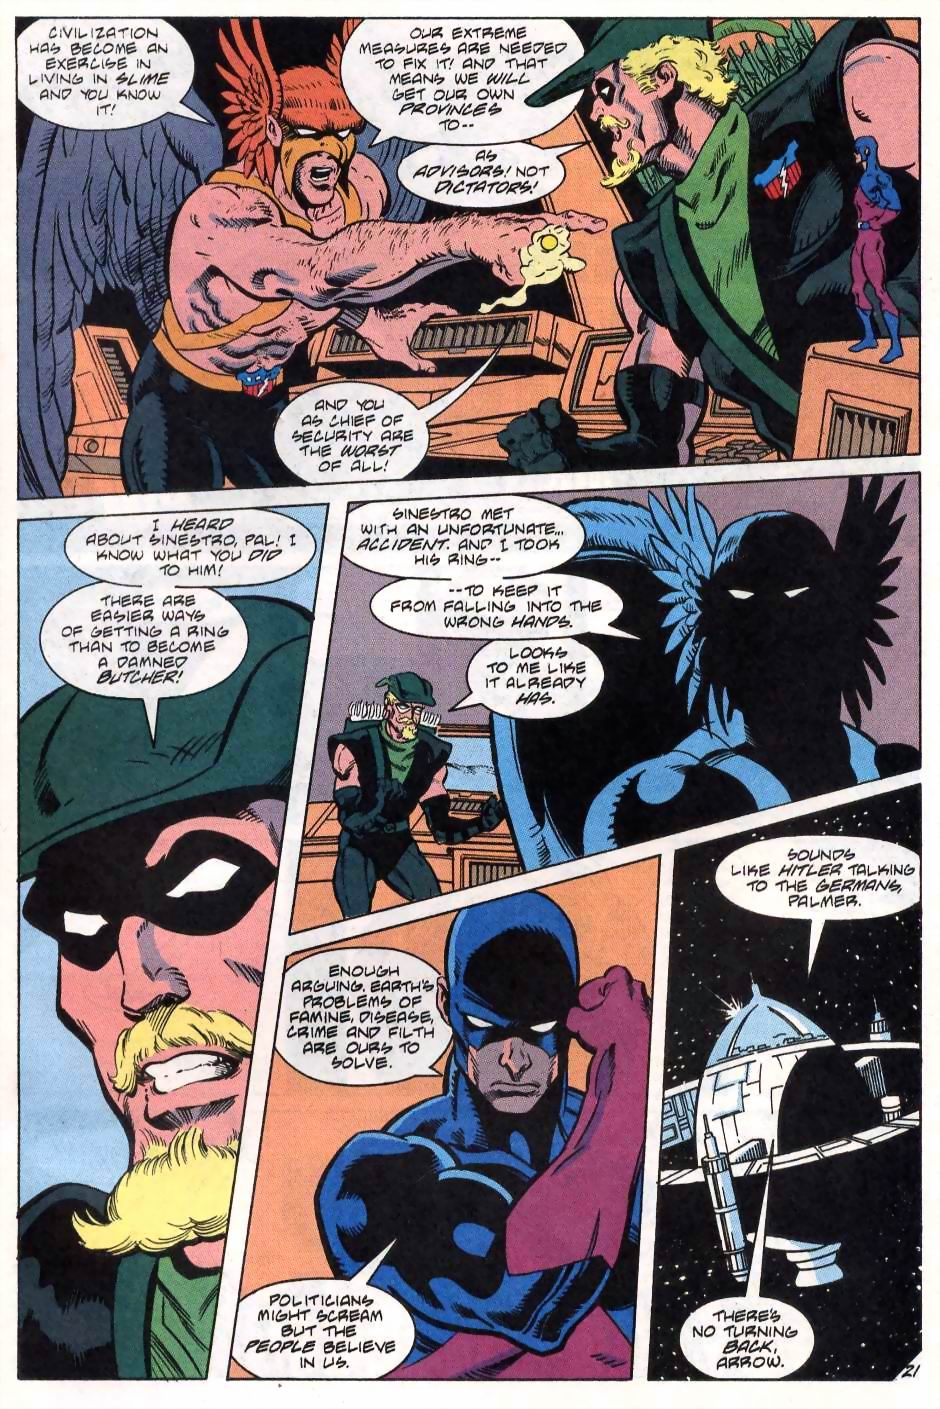 Justice League America 72 Page 19